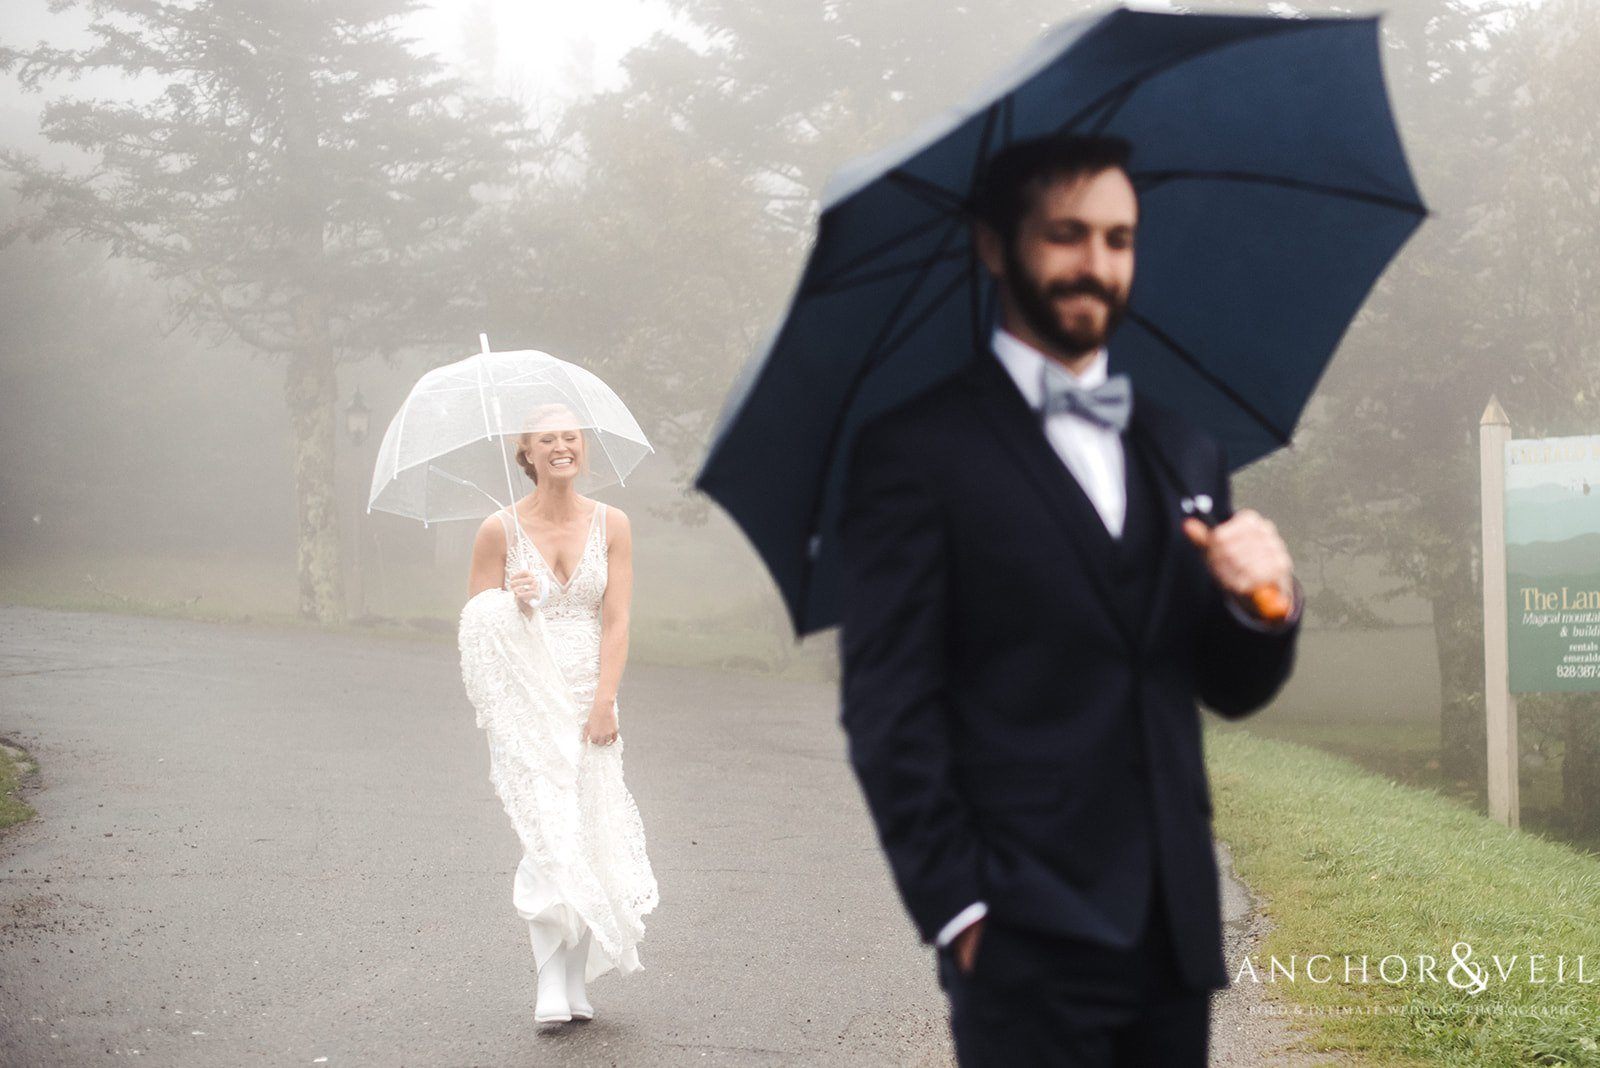 The bride and groom under umbrella at the Beech Mountain Ski Resort Wedding